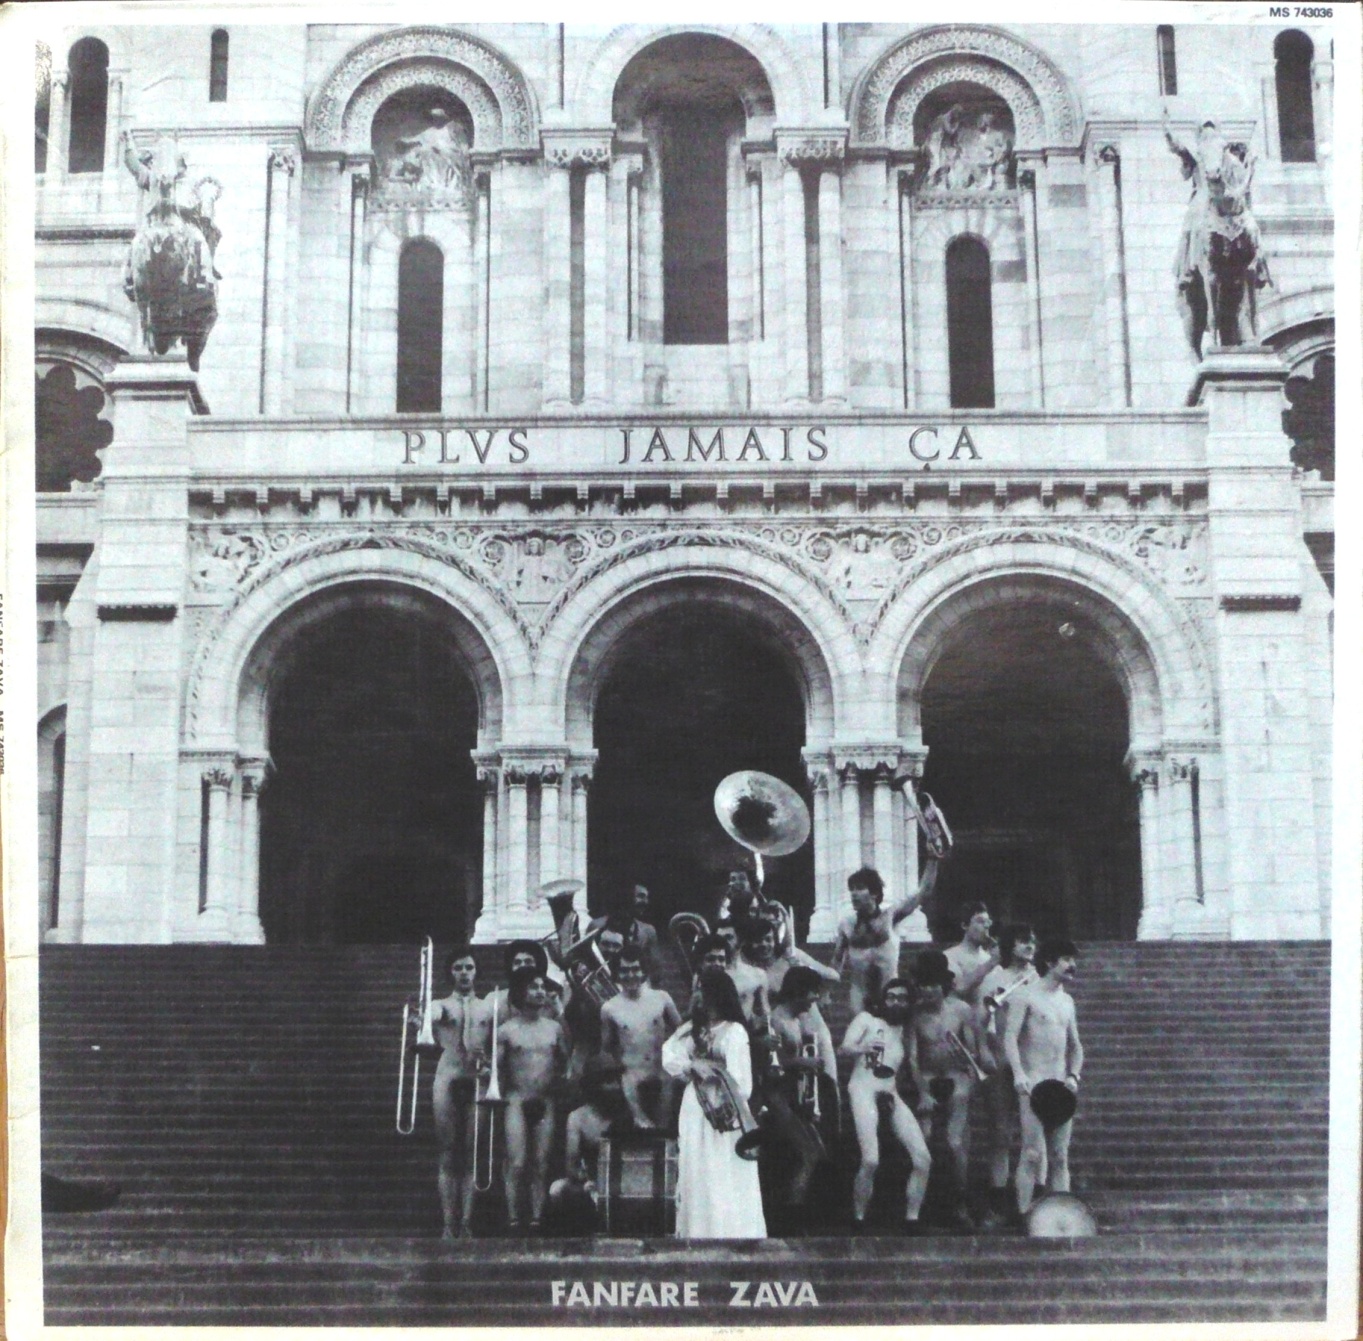 1974 : Fanfare Zava "Plus jamais ça" - pochette recto